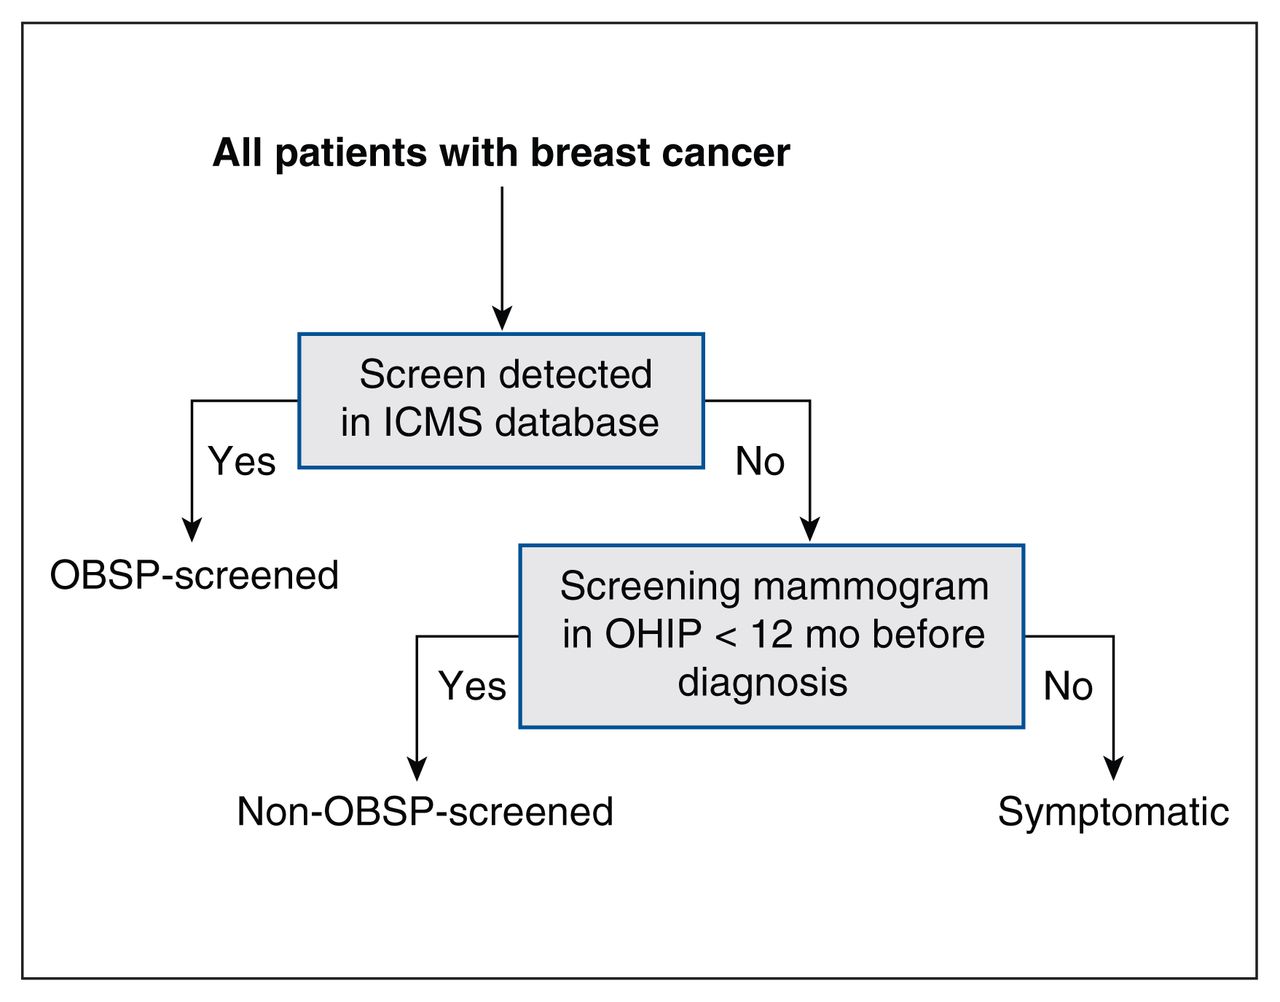 Breast (Chest) Density Information for Ontario Breast Screening